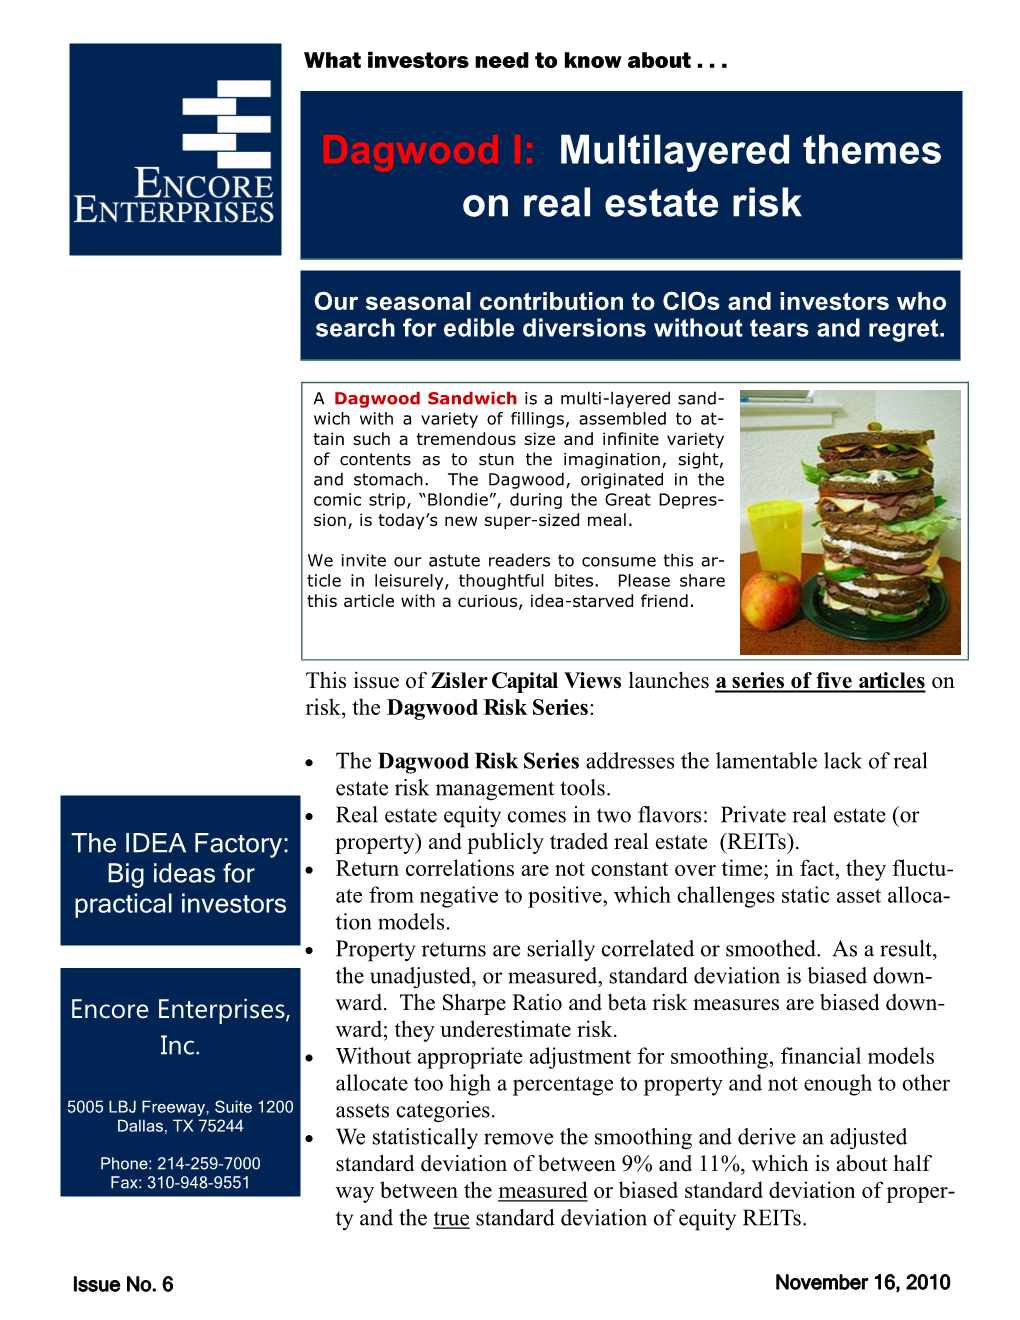 Dagwood I: Multilayered Themes on Real Estate Risk